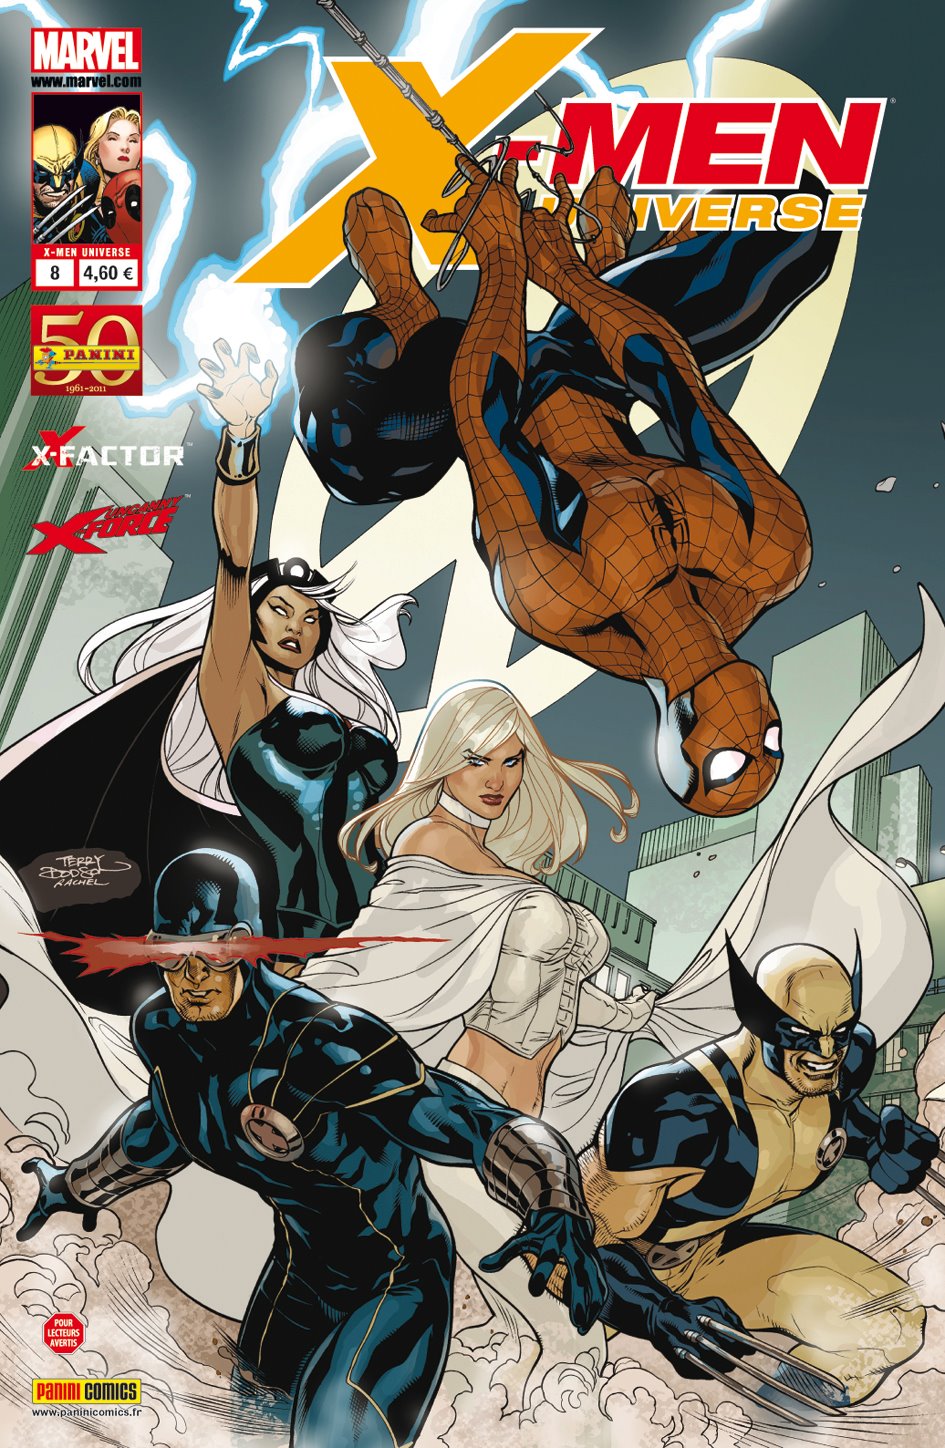  X-Men Universe – Revue V 1, T8 : Servir et protéger (0), comics chez Panini Comics de Remender, David, Gischler, Opeña, Lupacchino, Bachalo, Milla, White, Dodson